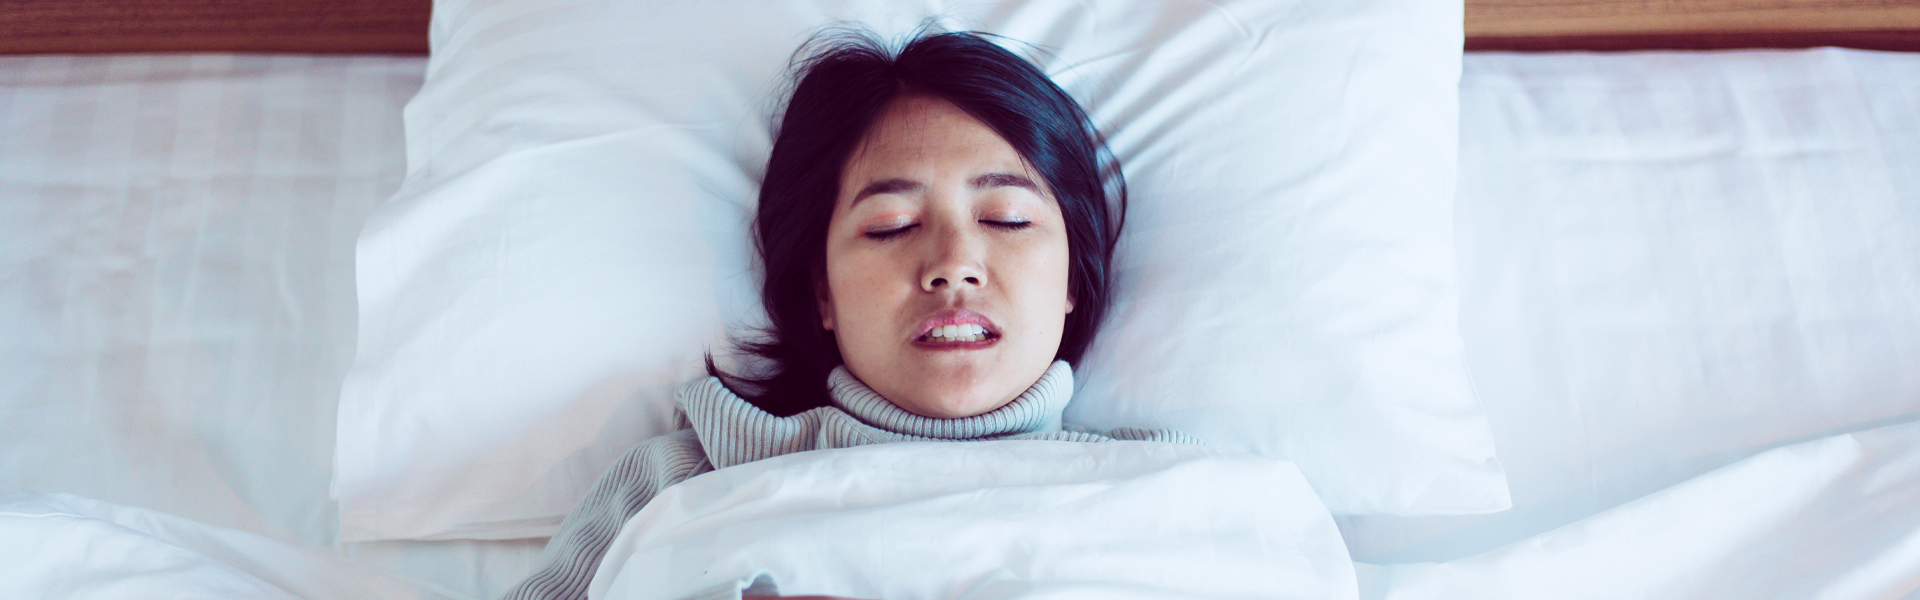 Dental Care: Obstructive Sleep Apnea in Children